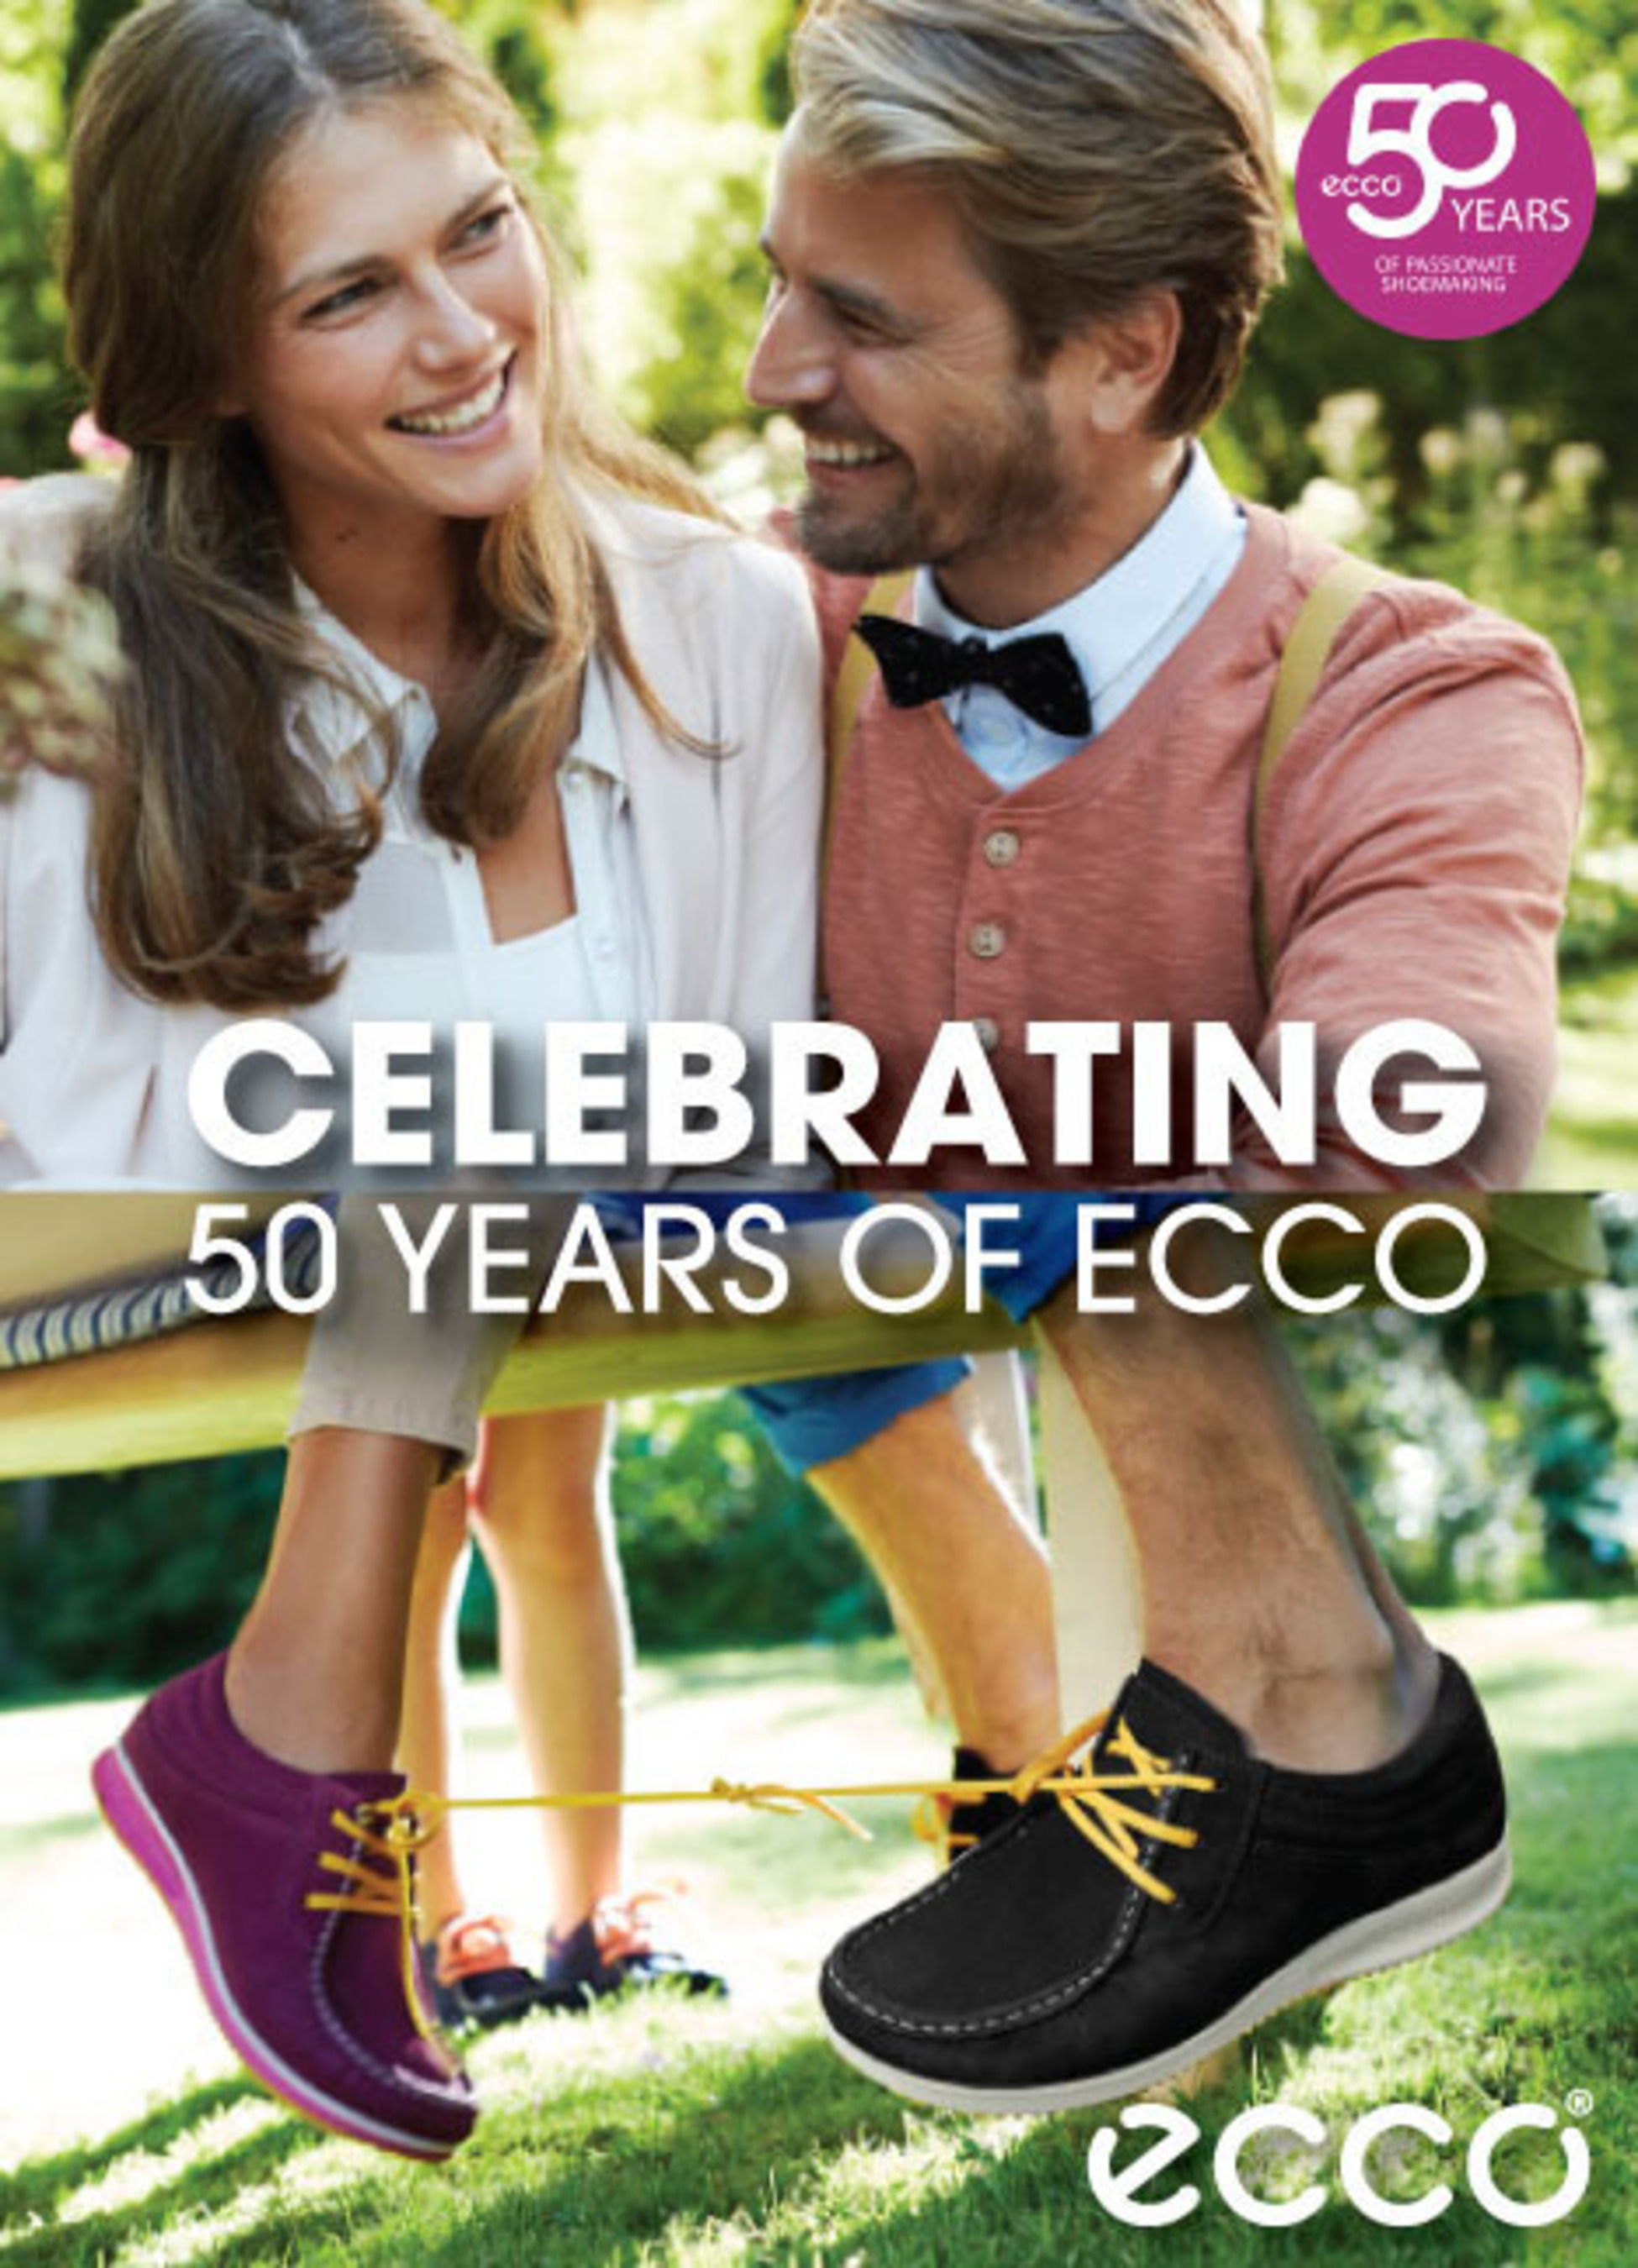 World's Second Largest Shoe Manufacturer, ECCO, Celebrates 50